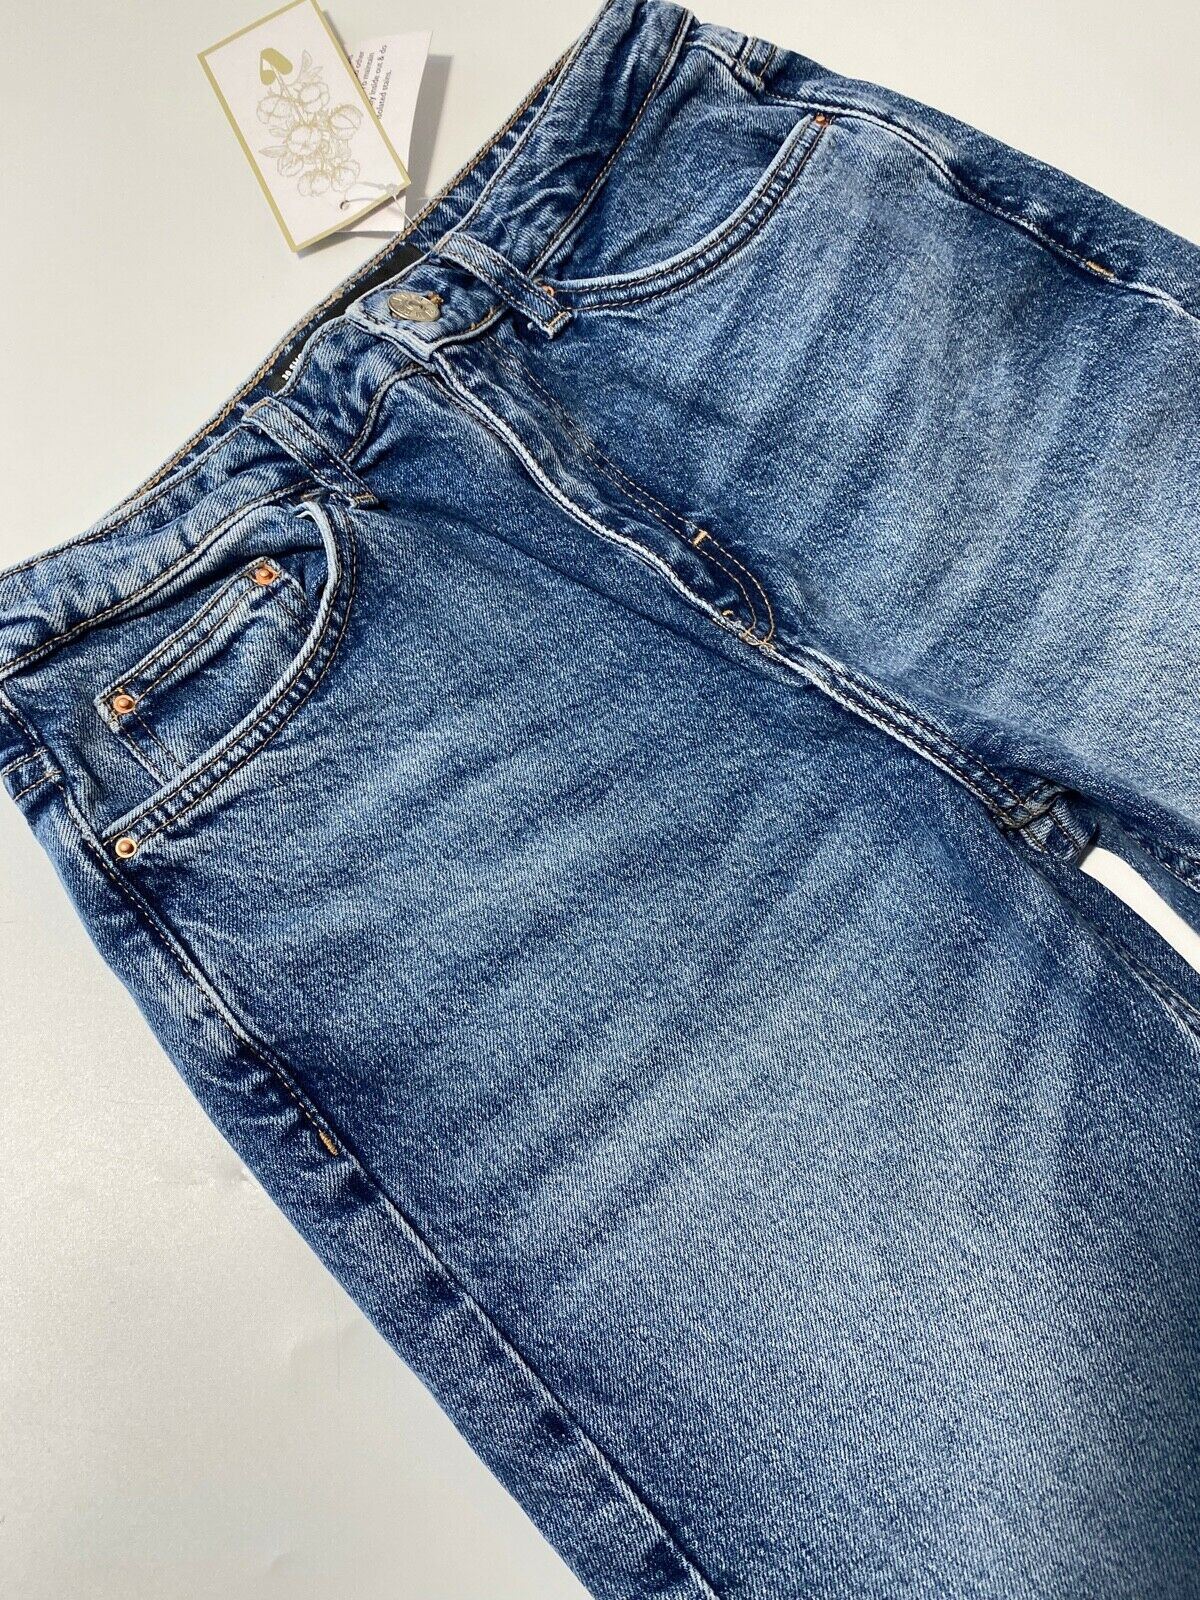 Very Mid Wash Blue High Waist Crop Jeans   Size 10 Short, 6 Regular